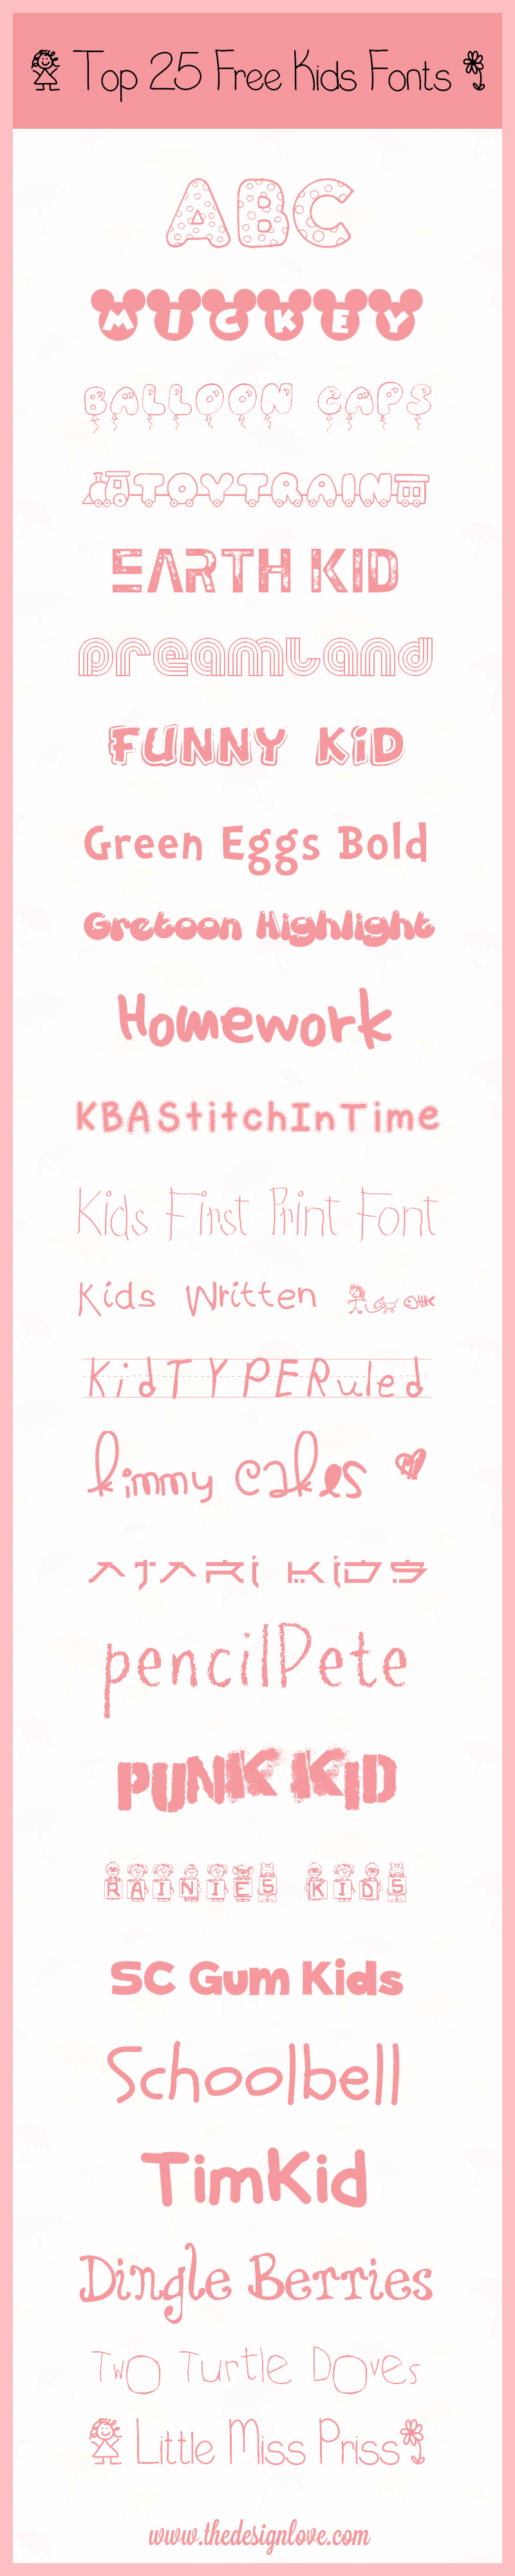 free-kids-fonts